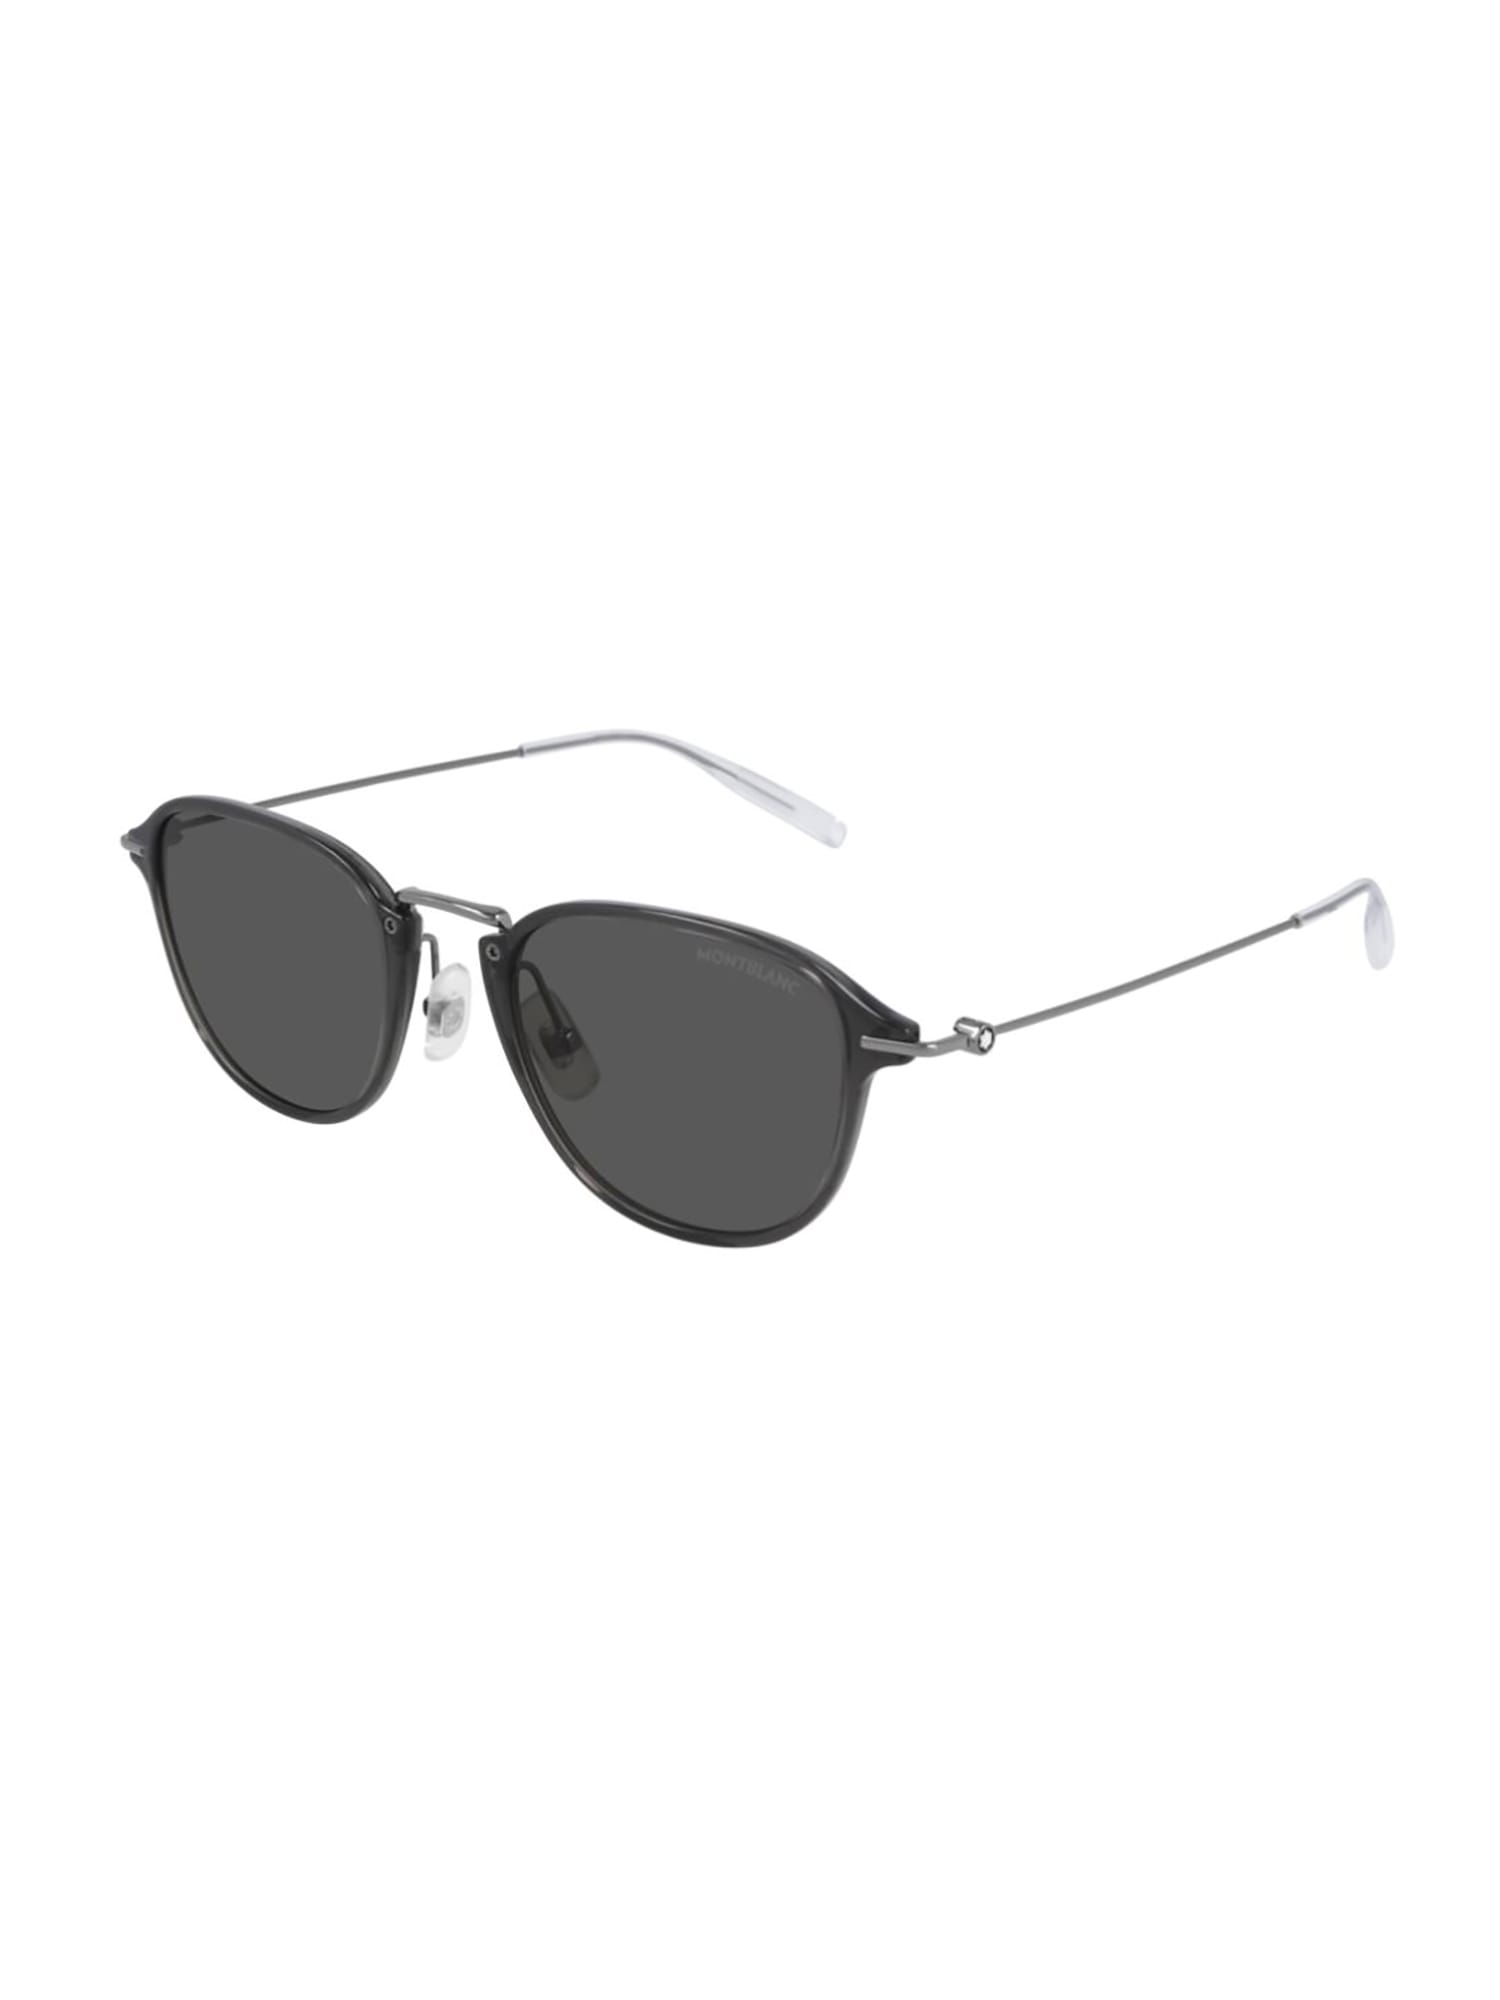 Montblanc Mb0155s Sunglasses In Grey Ruthenium Grey